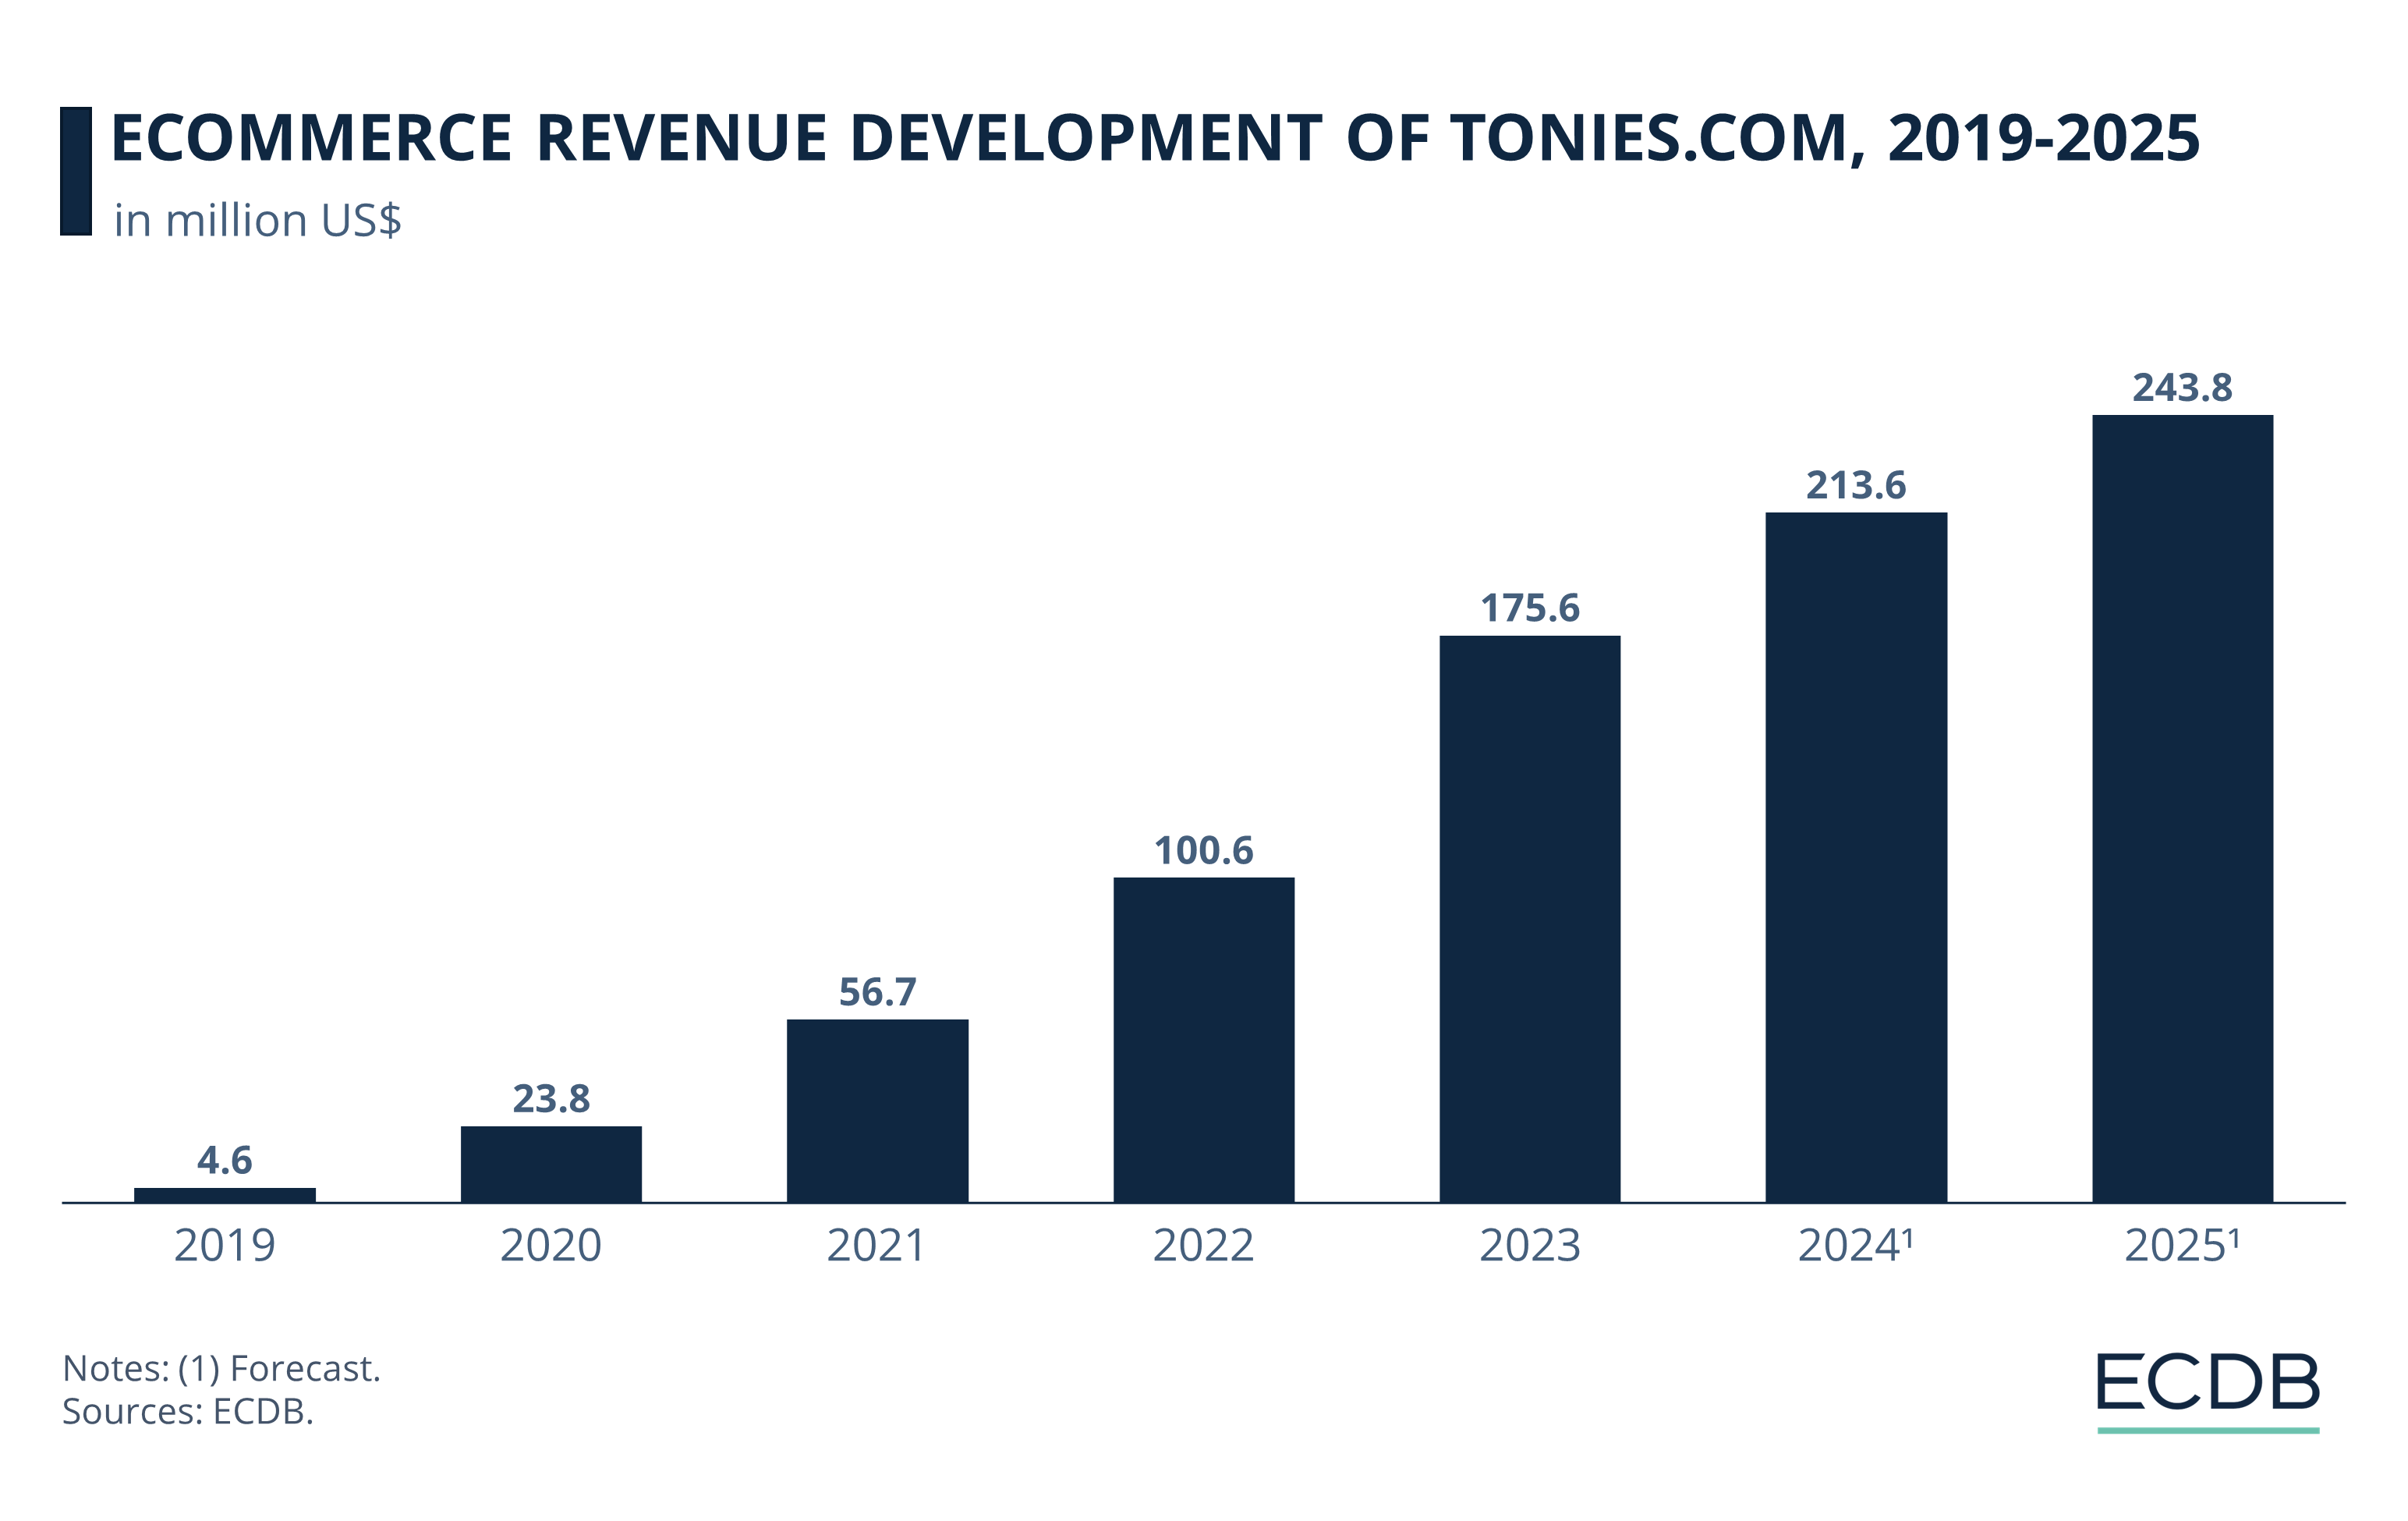 eCommerce Revenue Development of Tonies.com, 2019-2025